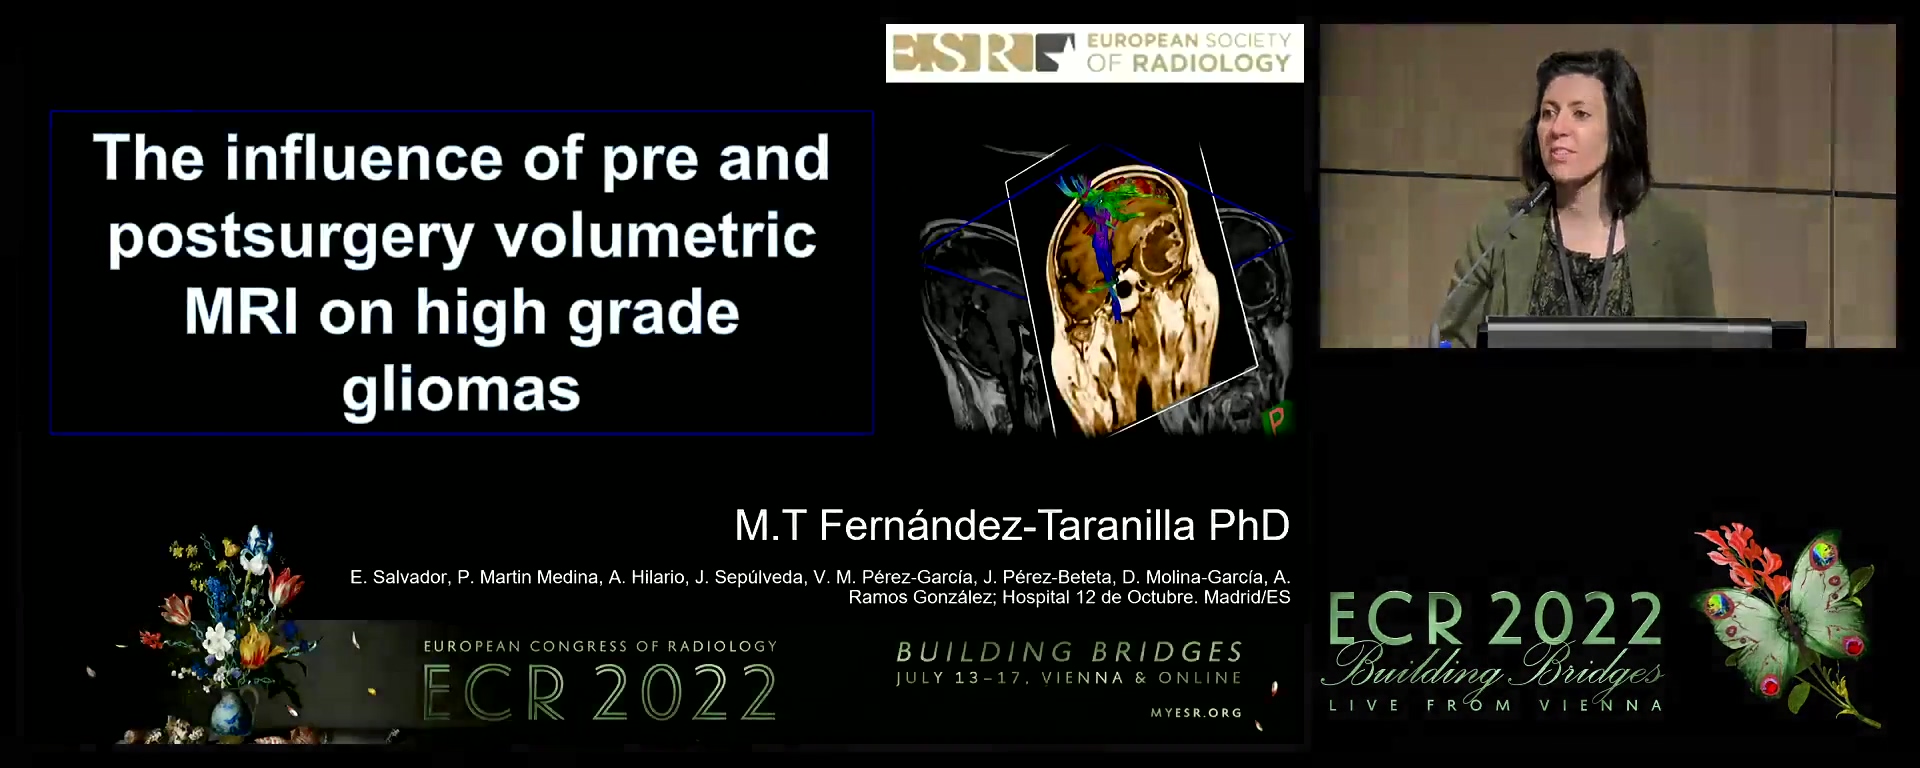 The influence of pre- and postsurgery volumetric MRI on high grade gliomas